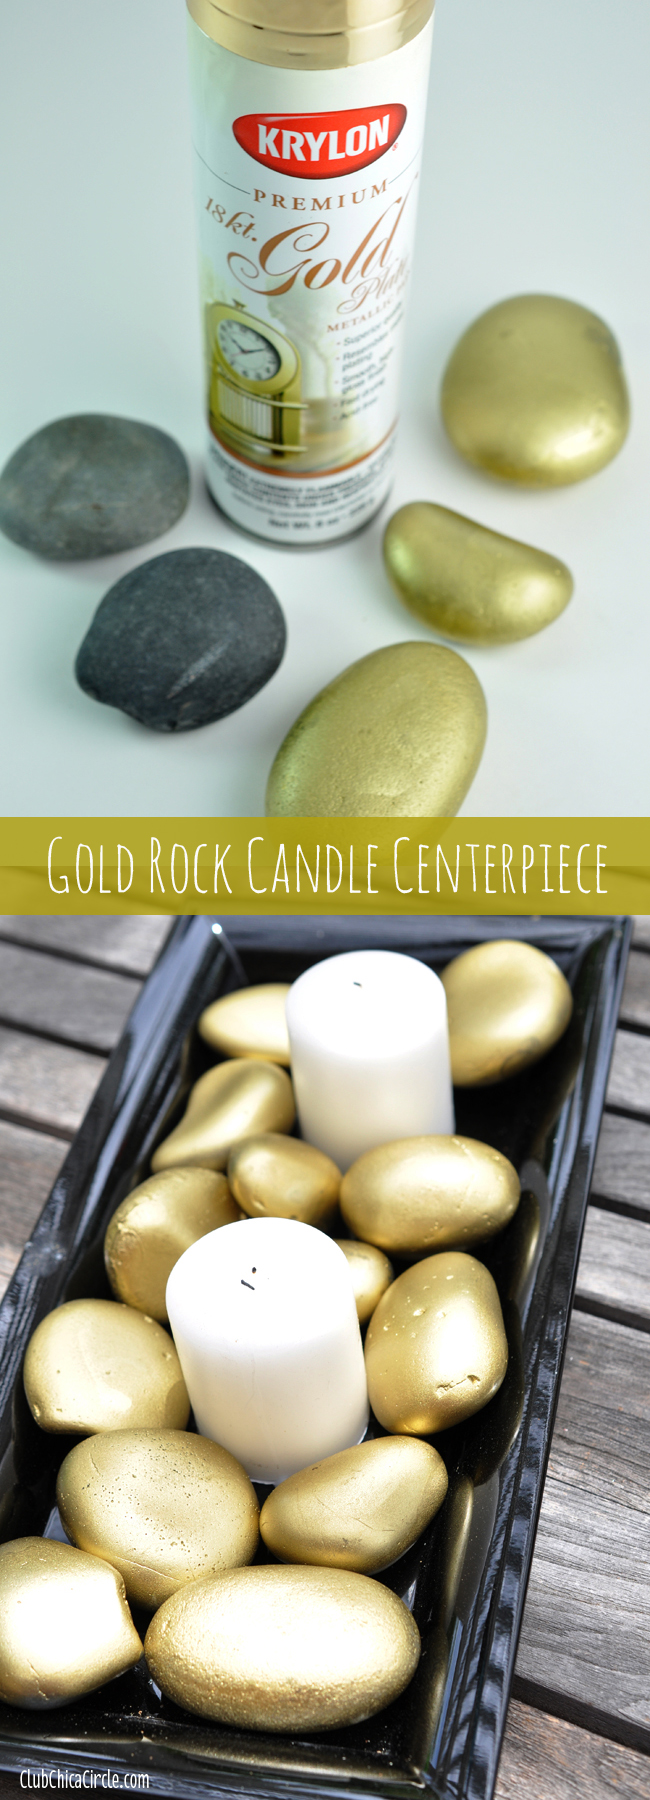 Gold-Rock-Candle-Centerpiece-easy-craft-idea